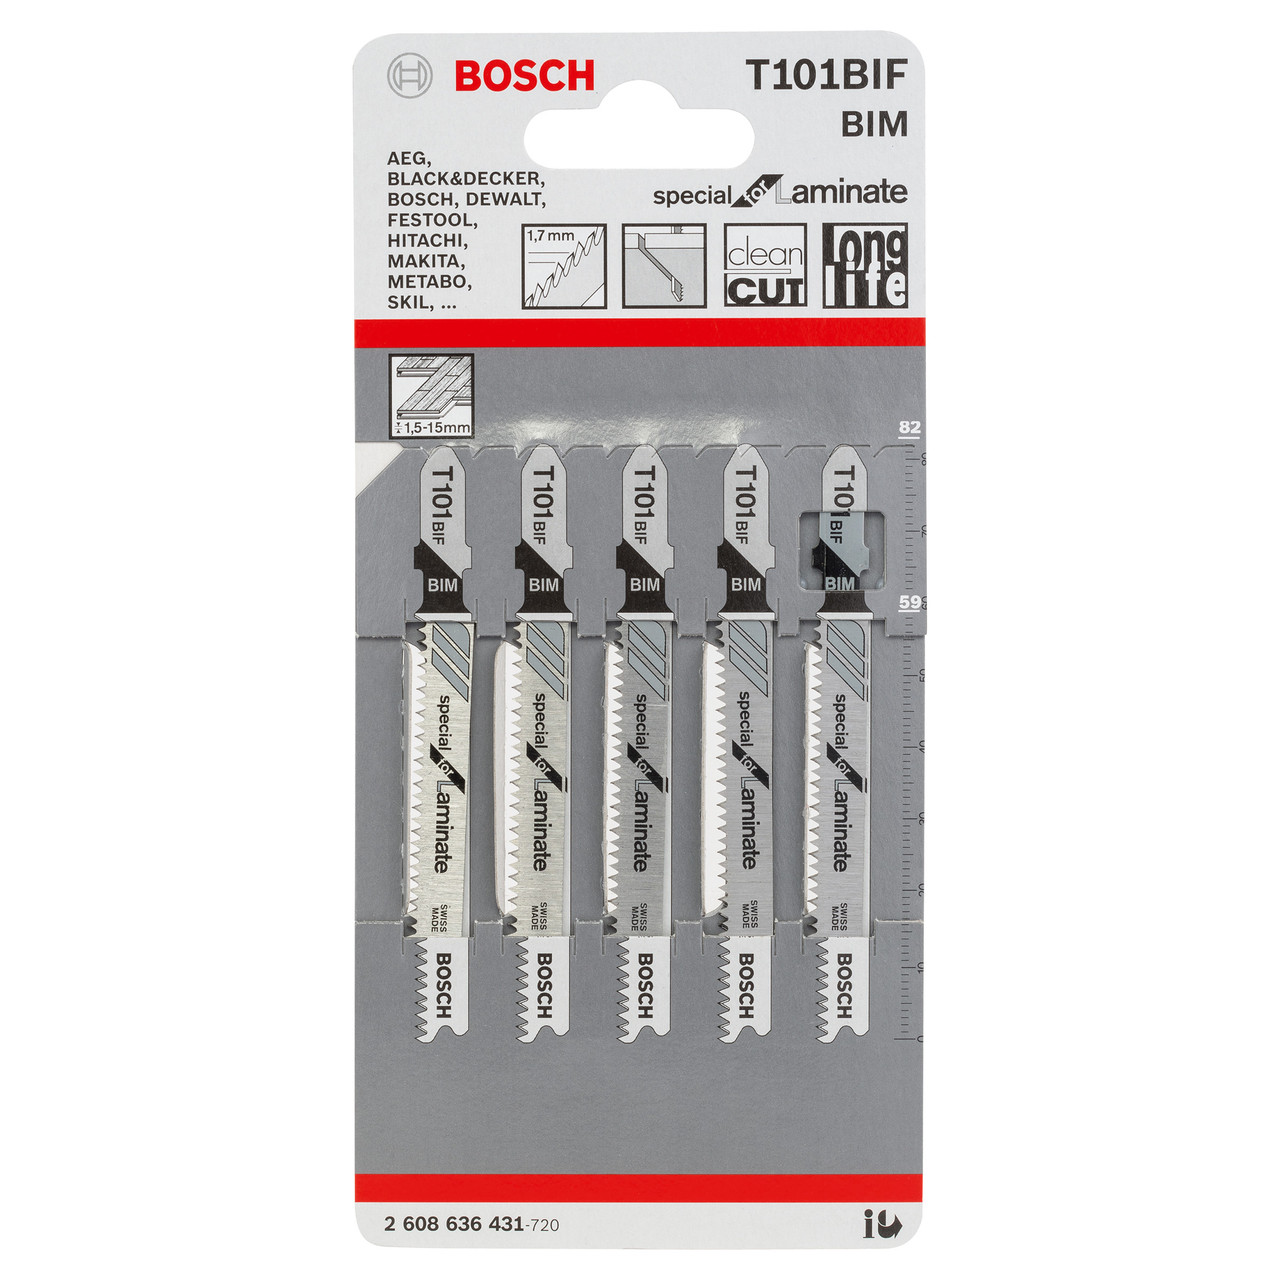 Photos - Electric Jigsaw Bosch T101BIF Jigsaw Blades BIM Special for Laminate  2608636431 (5 Pack)